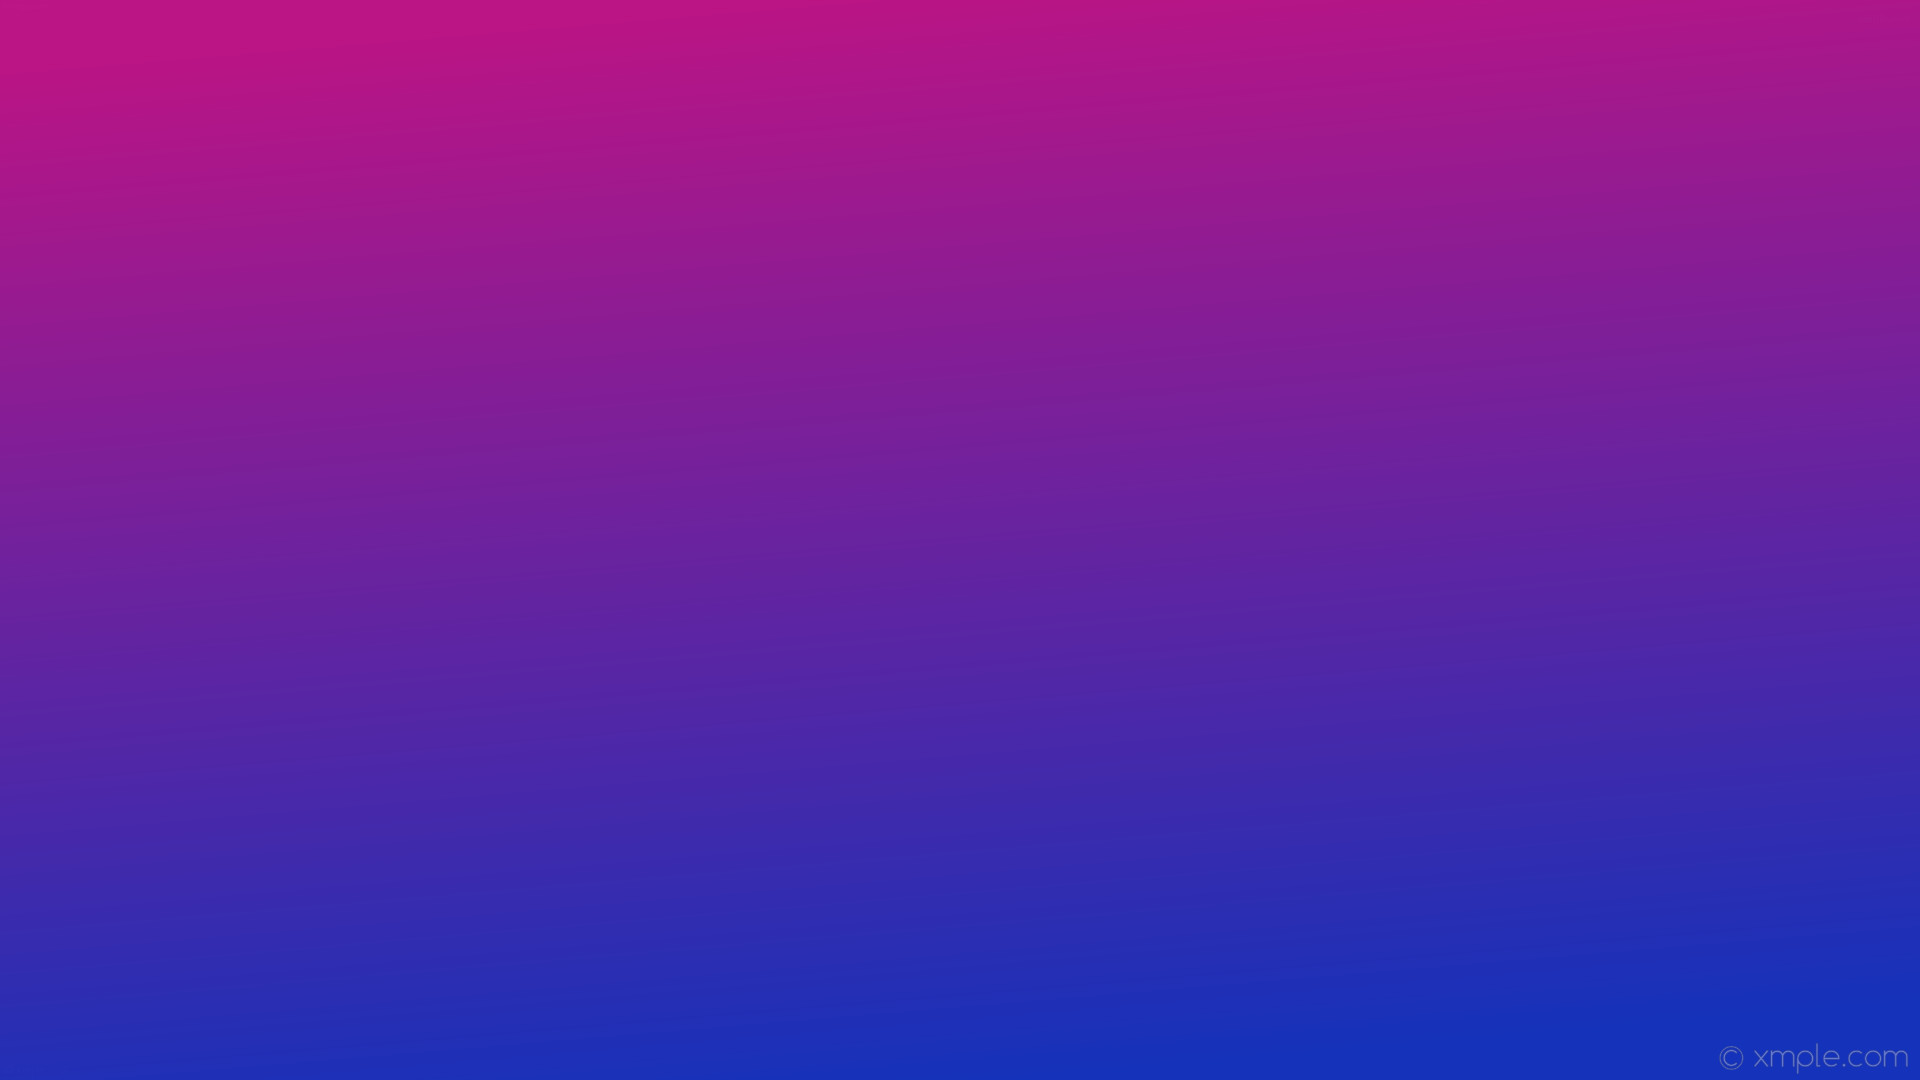 Wallpaper Linear Pink Gradient Blue Purple Ombre